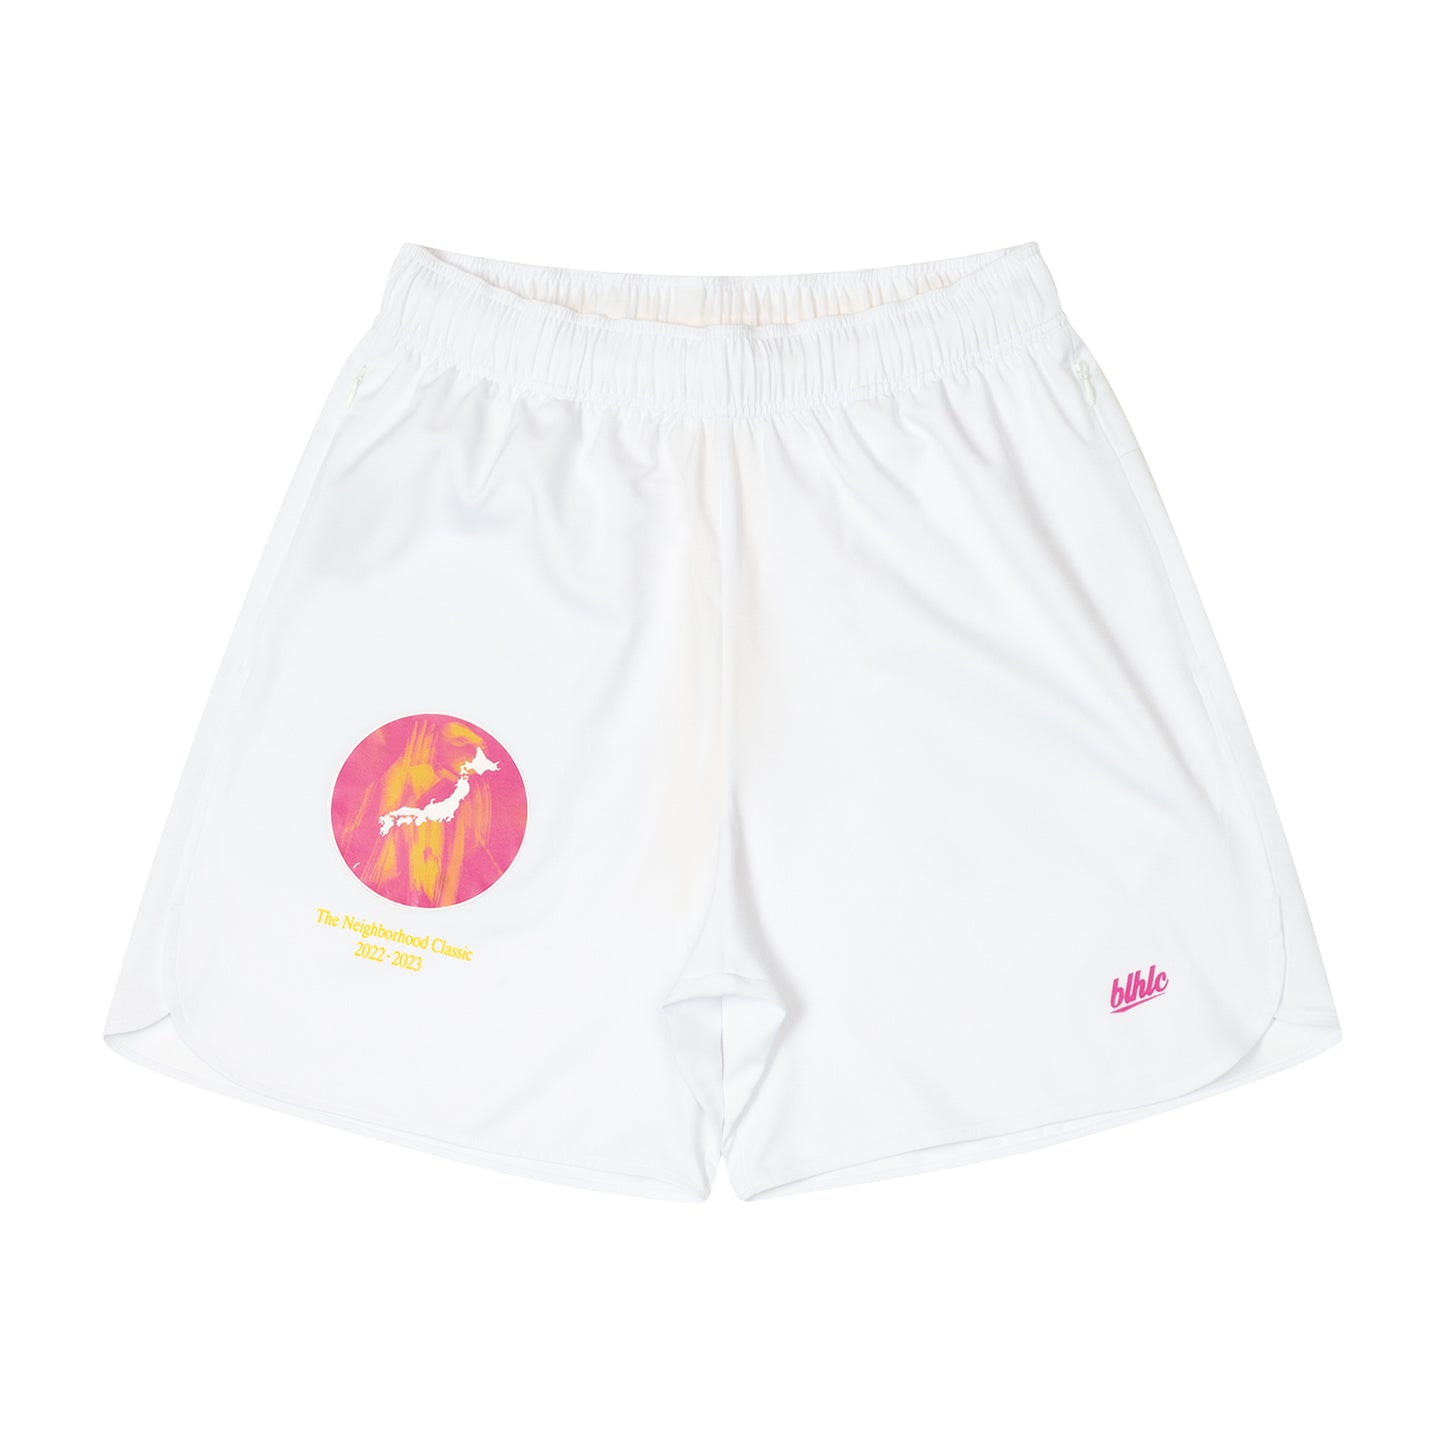 The Final Zip Shorts (white)